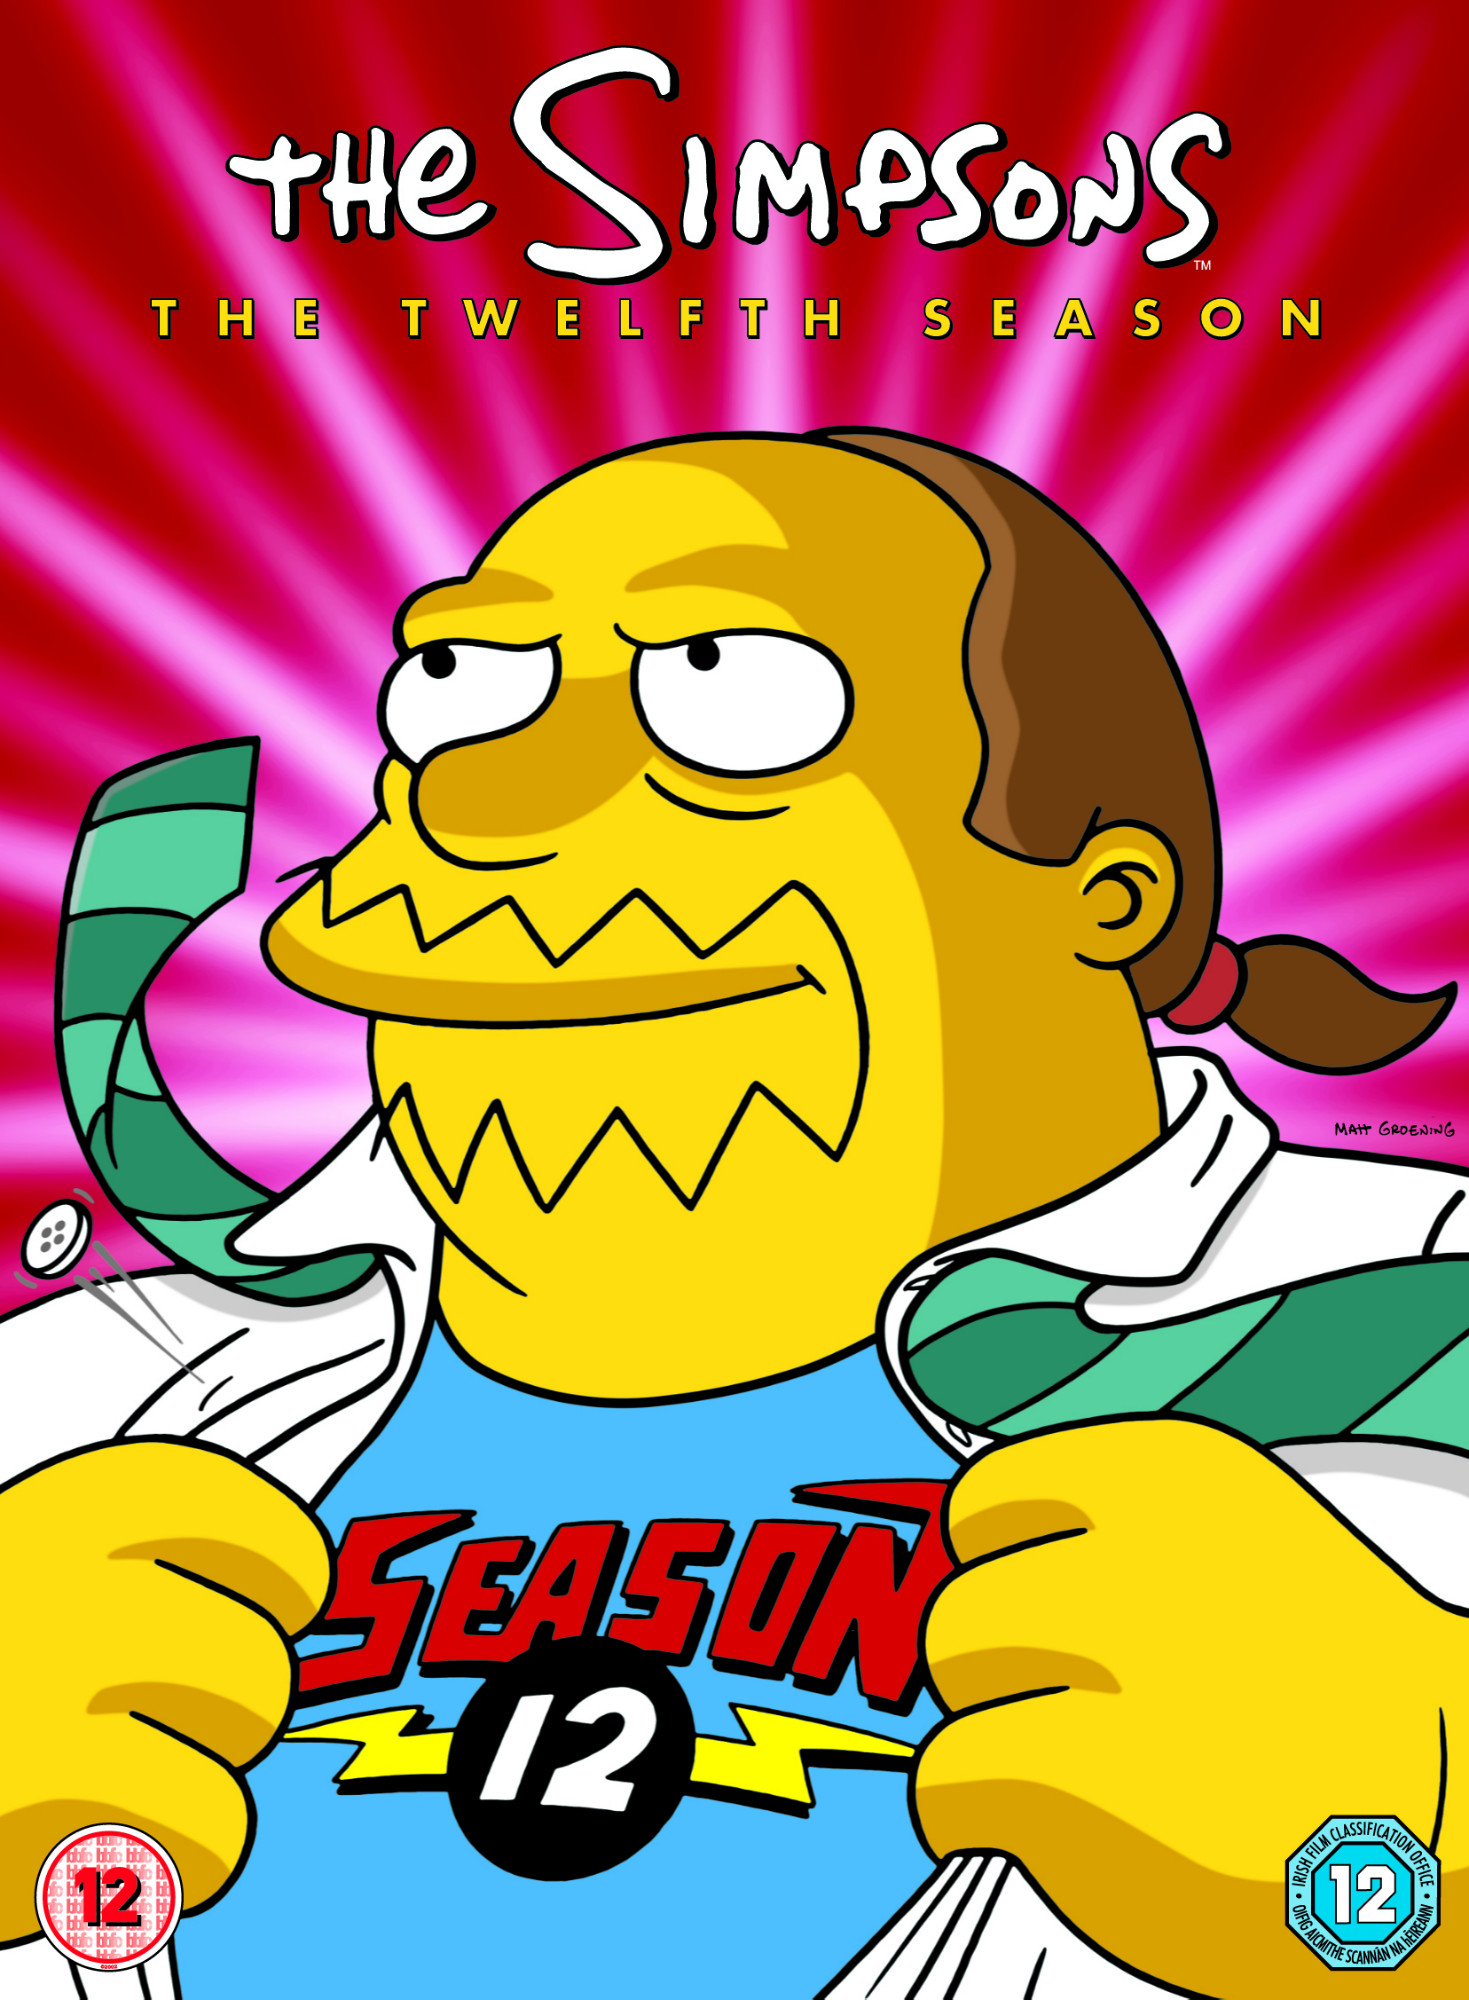 The Simpsons season 12 in HD - TVstock